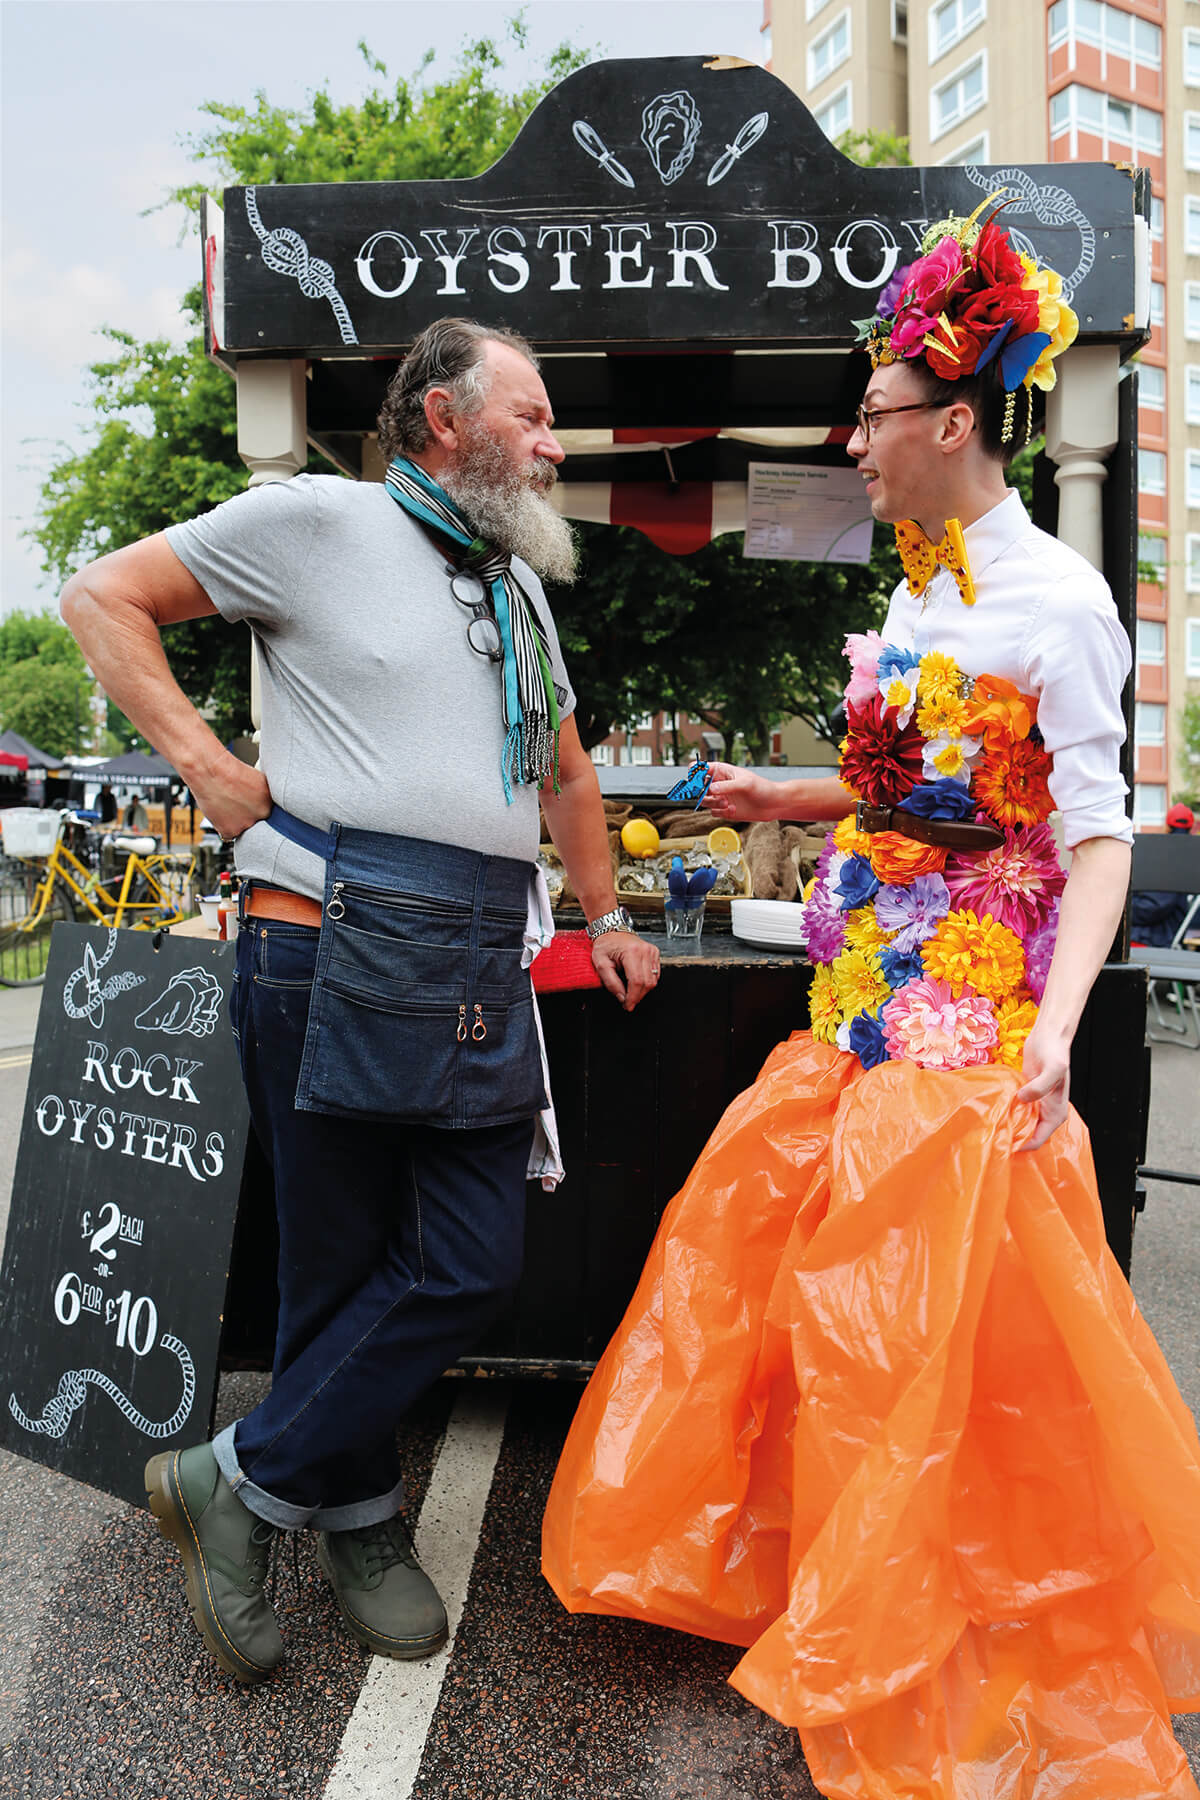 Designer Florent Bidois pictured in conversation with a street vendoer